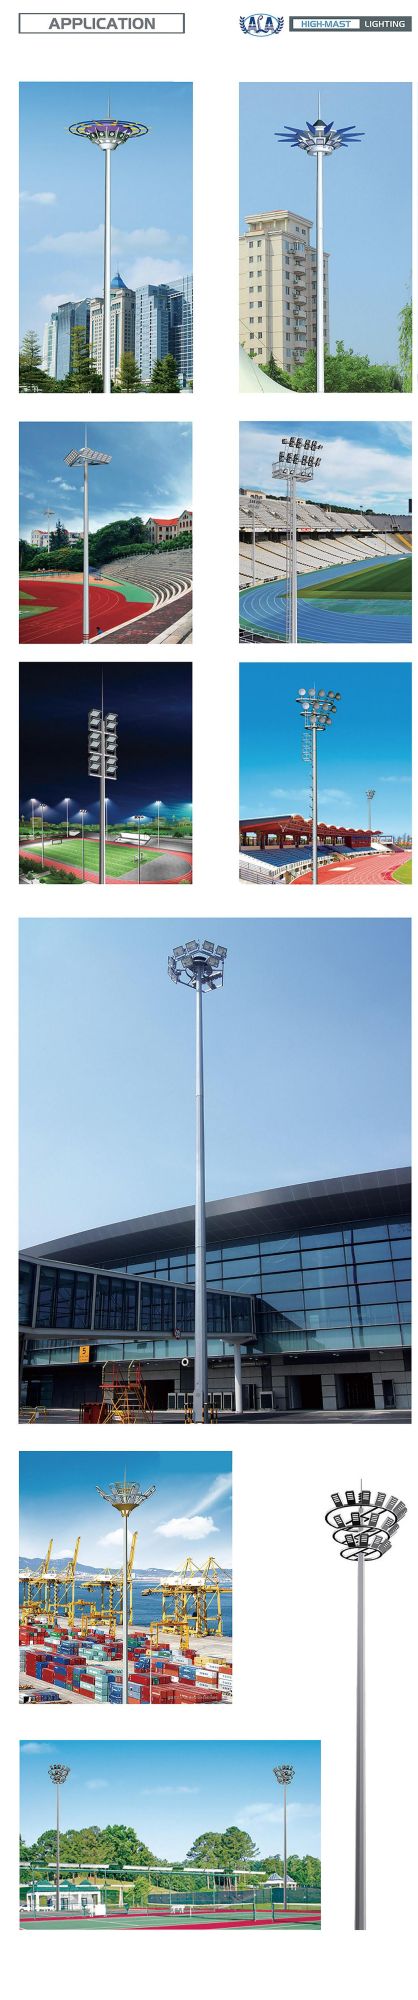 Ala 500W LED High Mast Sports Arena Lighting 300W 400W 500W Outdoor Stadium Court Light